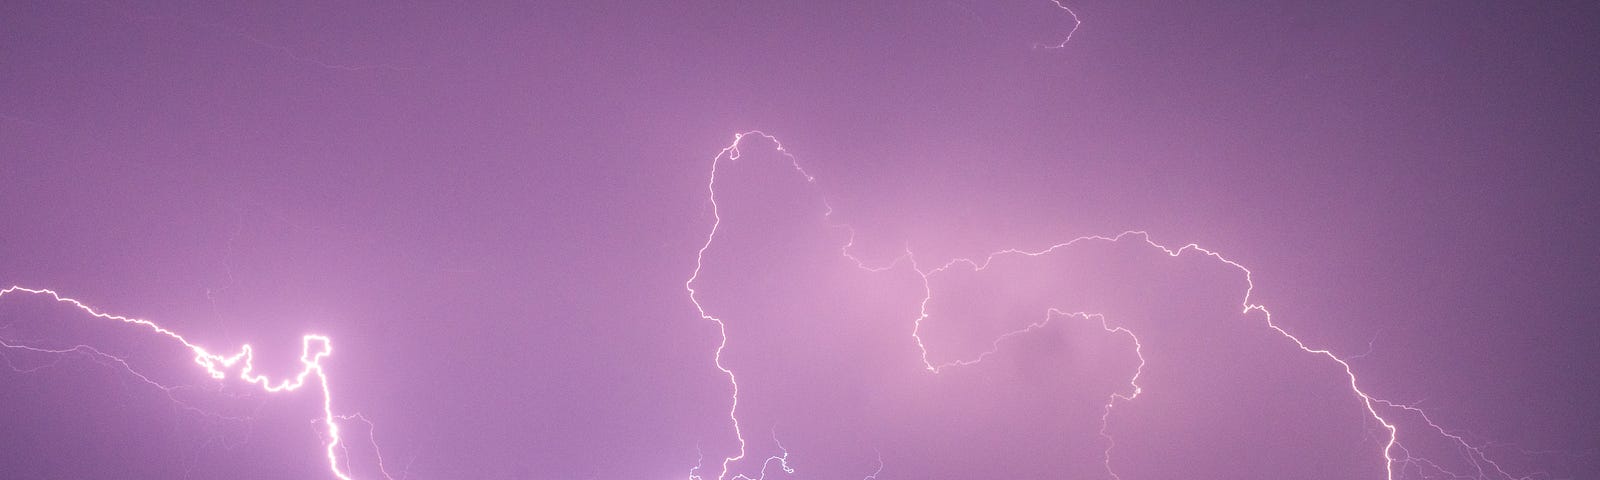 lightning strike by trees